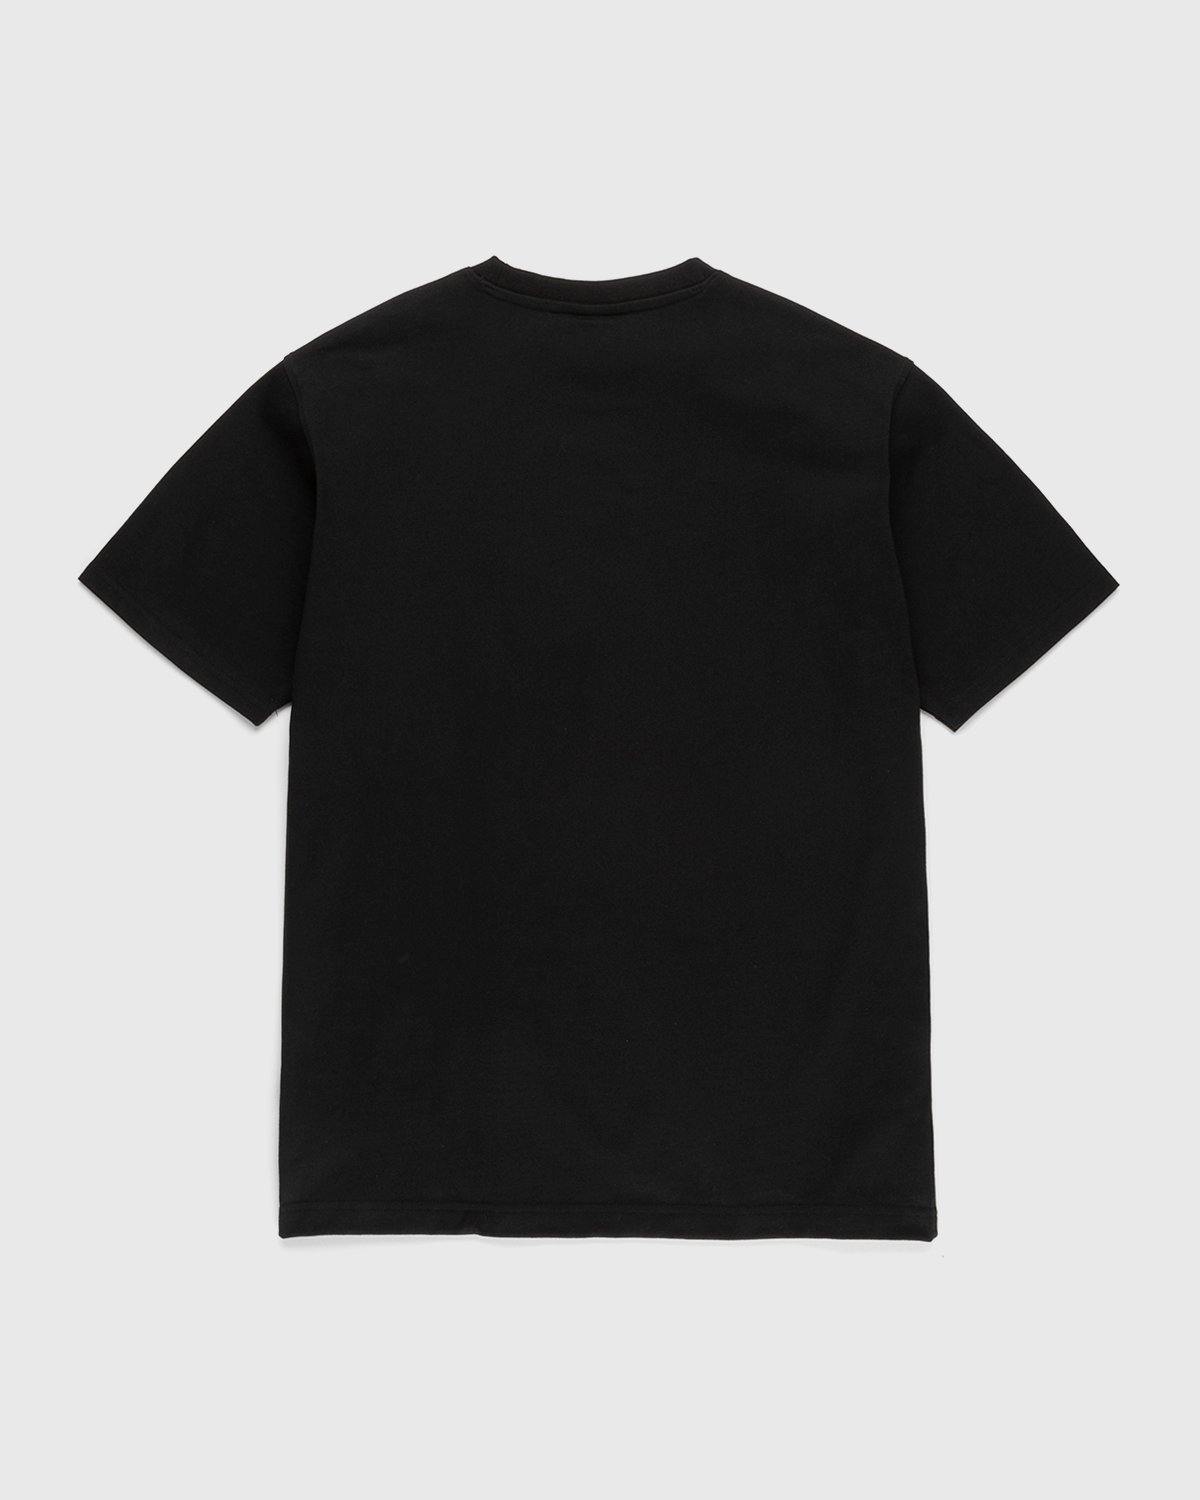 New Balance - Conversations Amongst Us Brand T-Shirt Black - Clothing - Black - Image 2